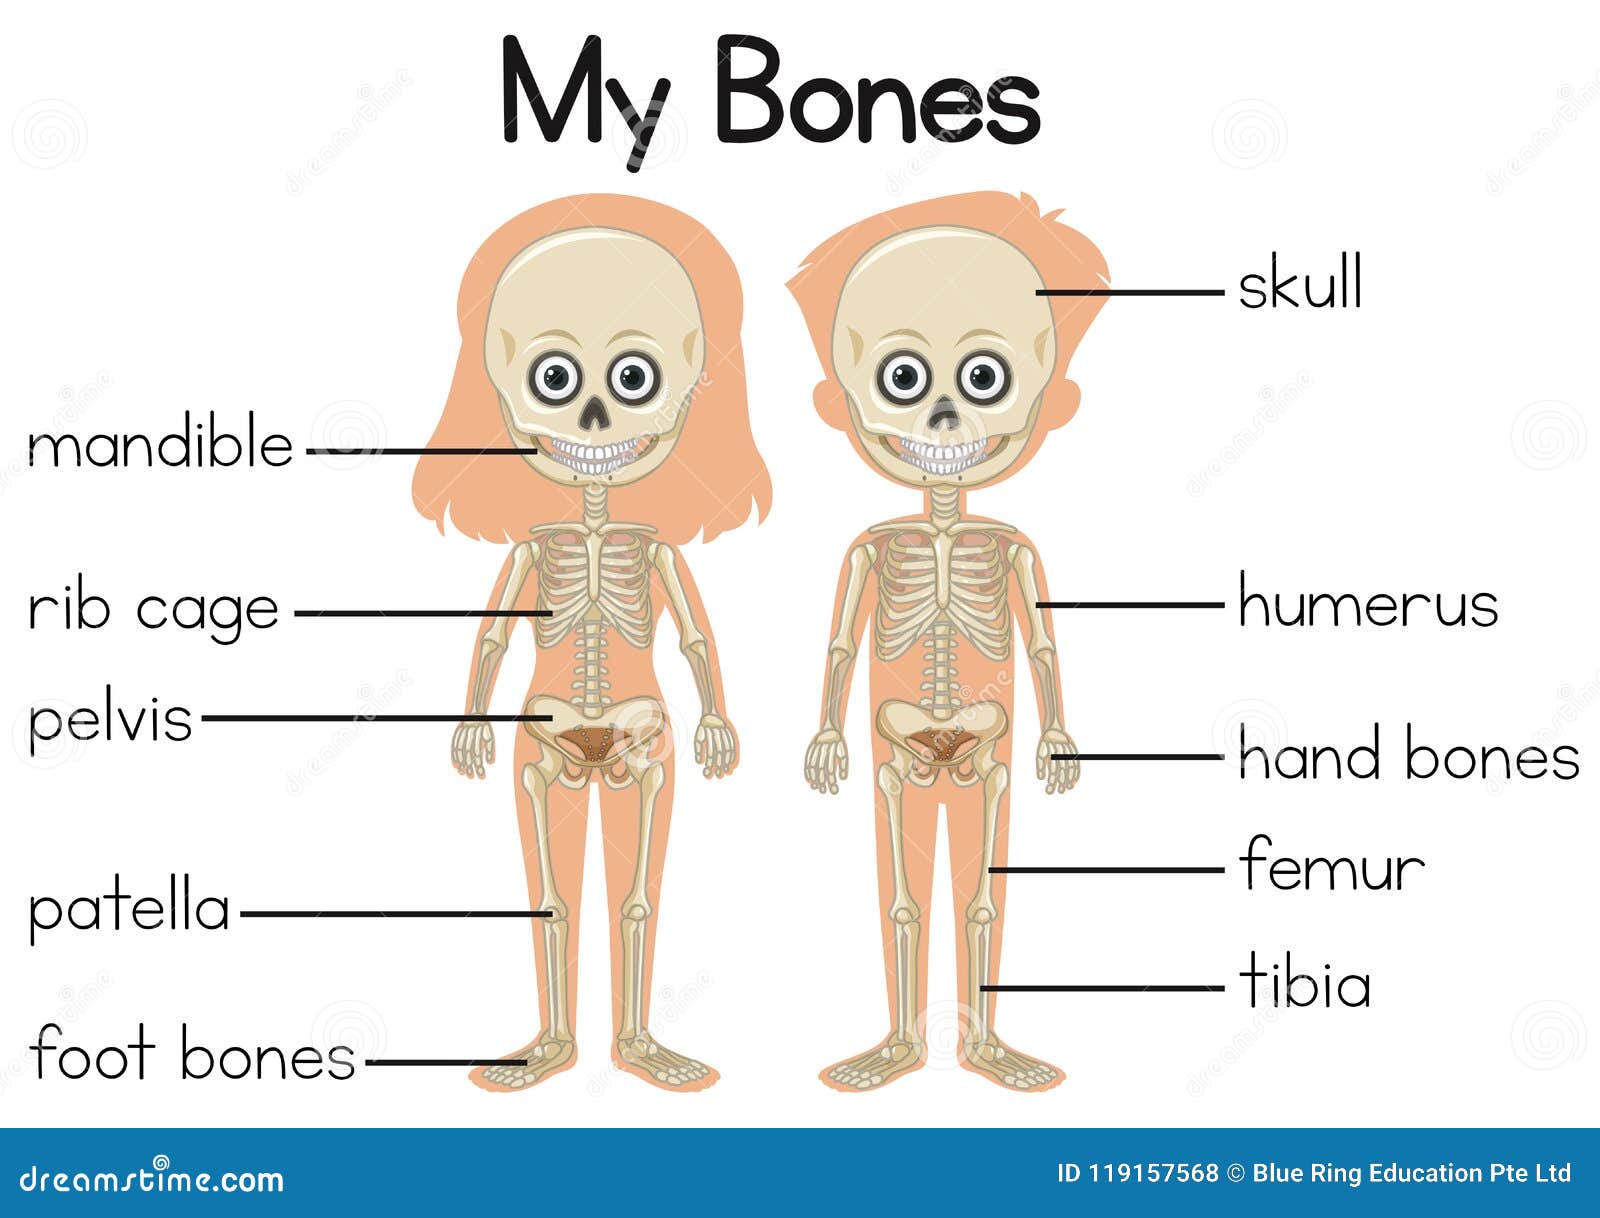 Are bones kid friendly?